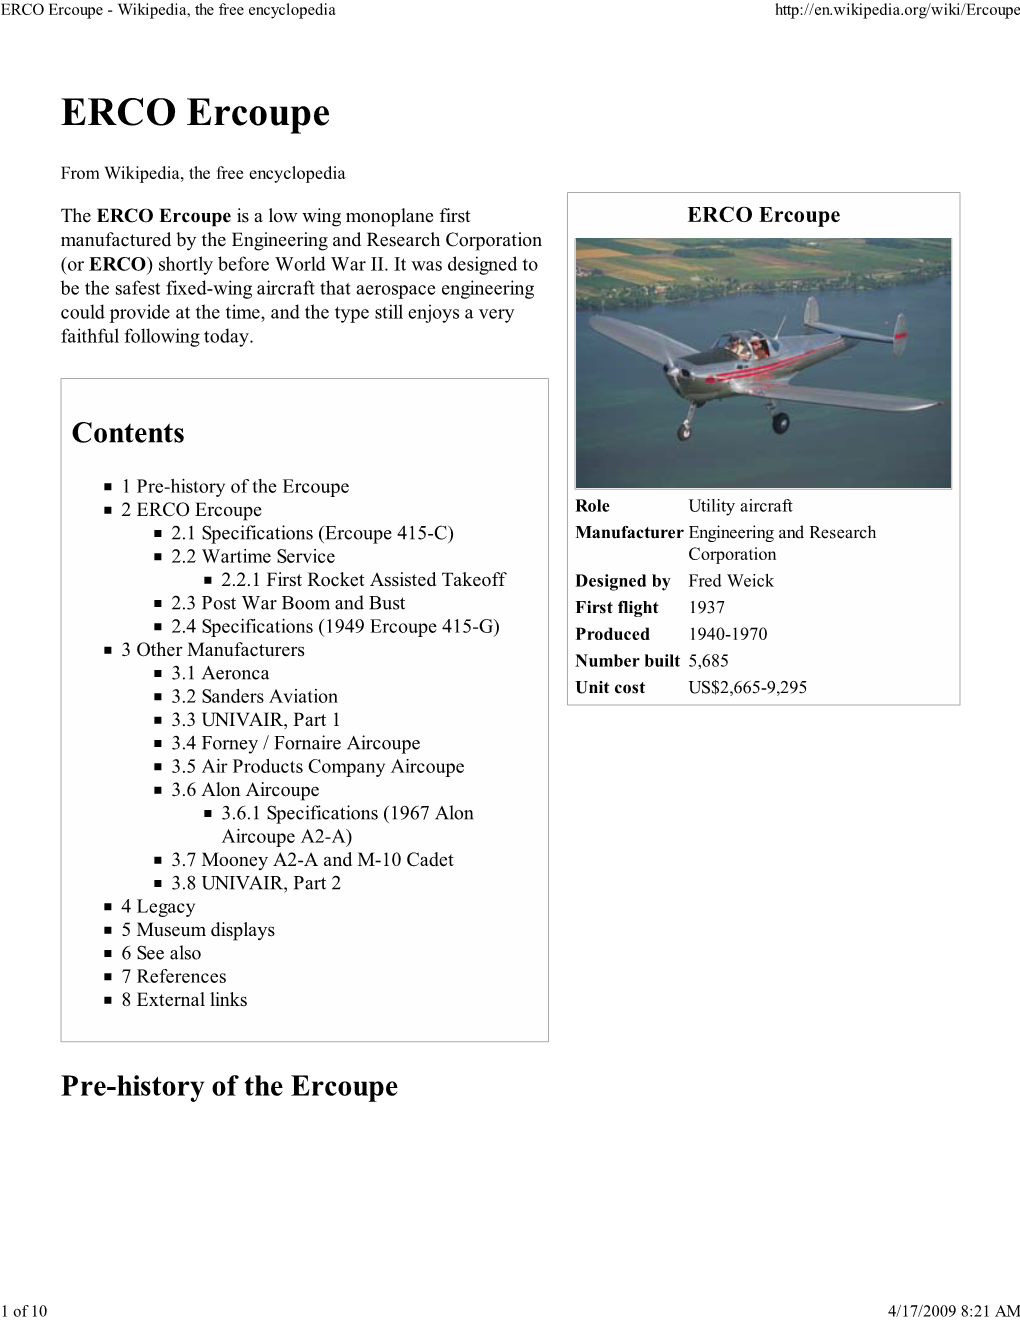 ERCO Ercoupe - Wikipedia, the Free Encyclopedia